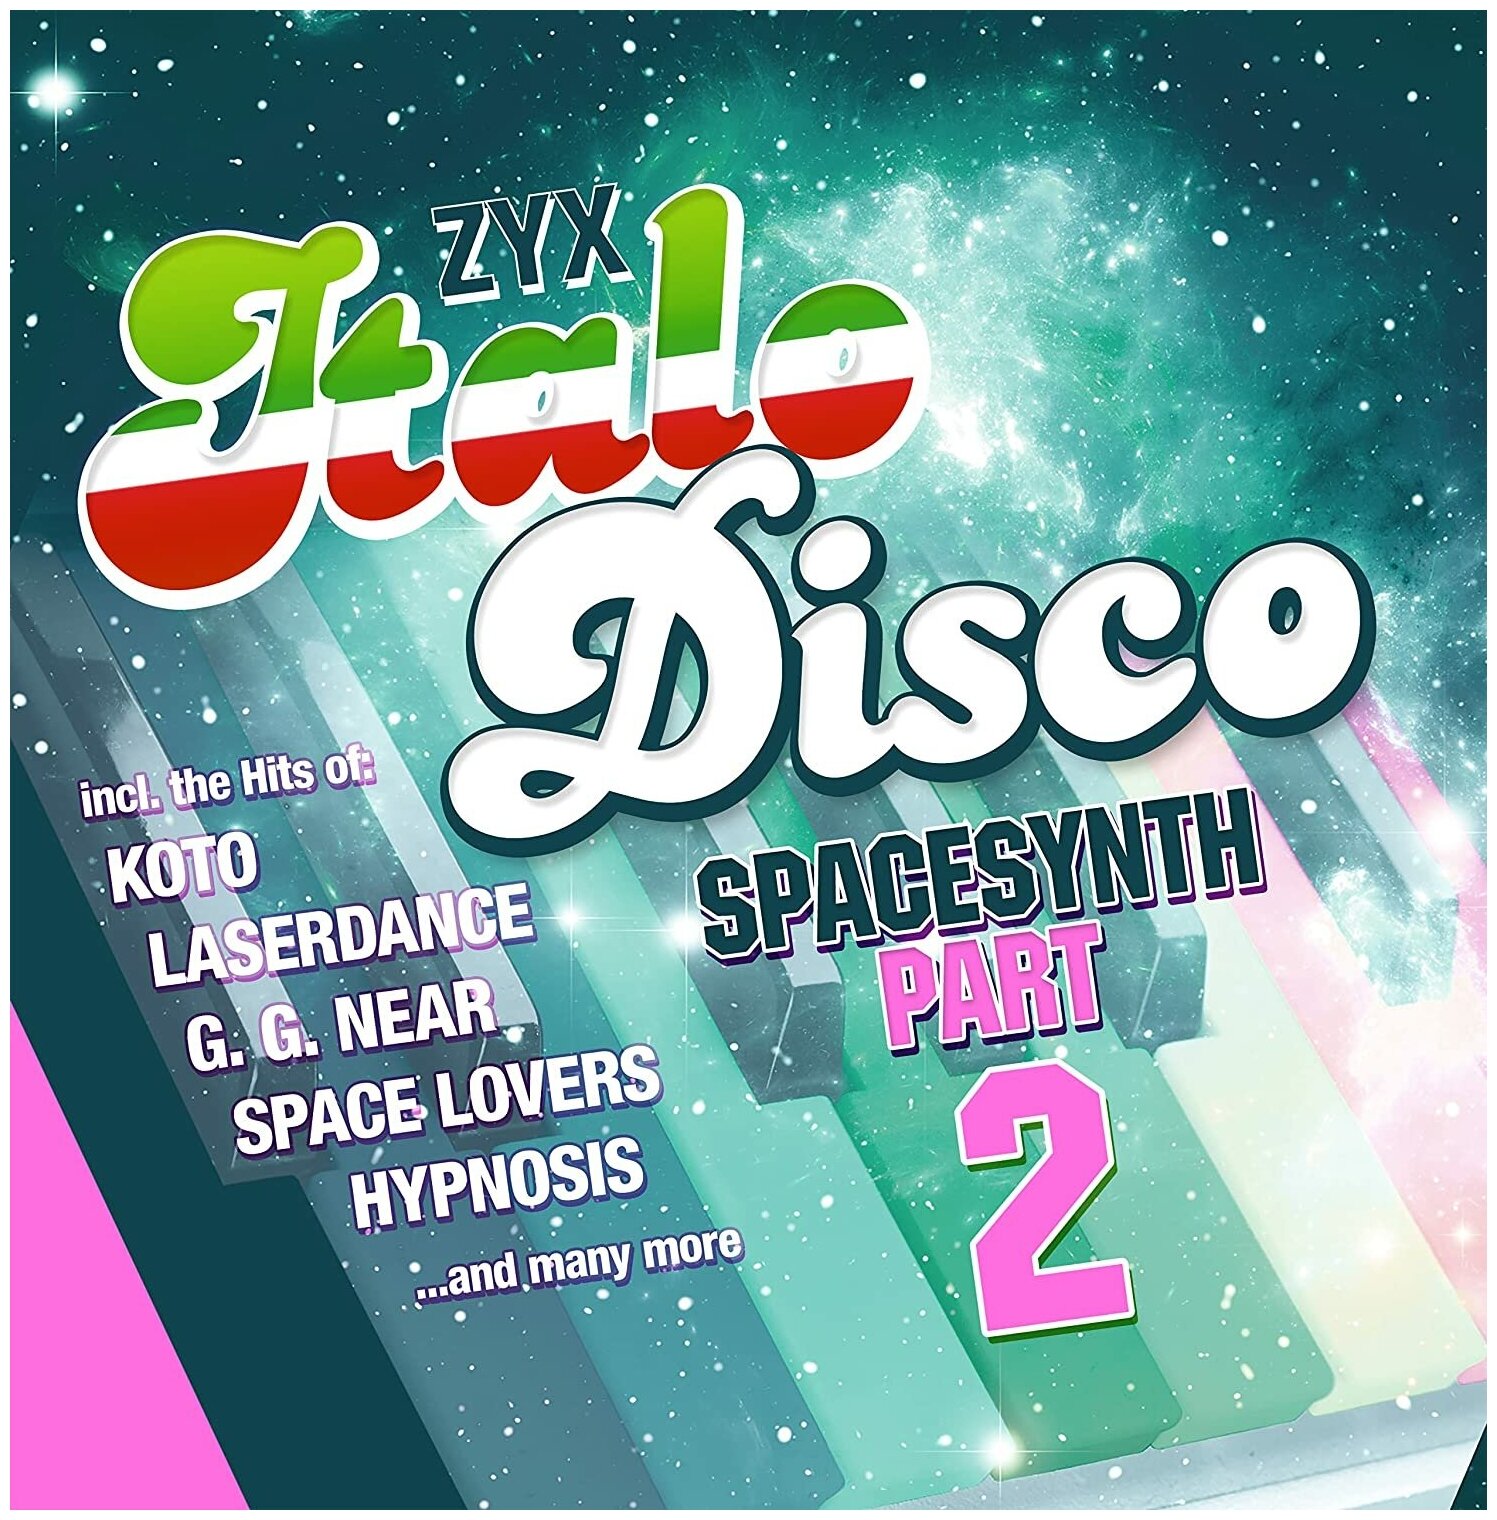 Various Artists "Виниловая пластинка Various Artists Zyx Italo Disco Spacesynth Part 2"